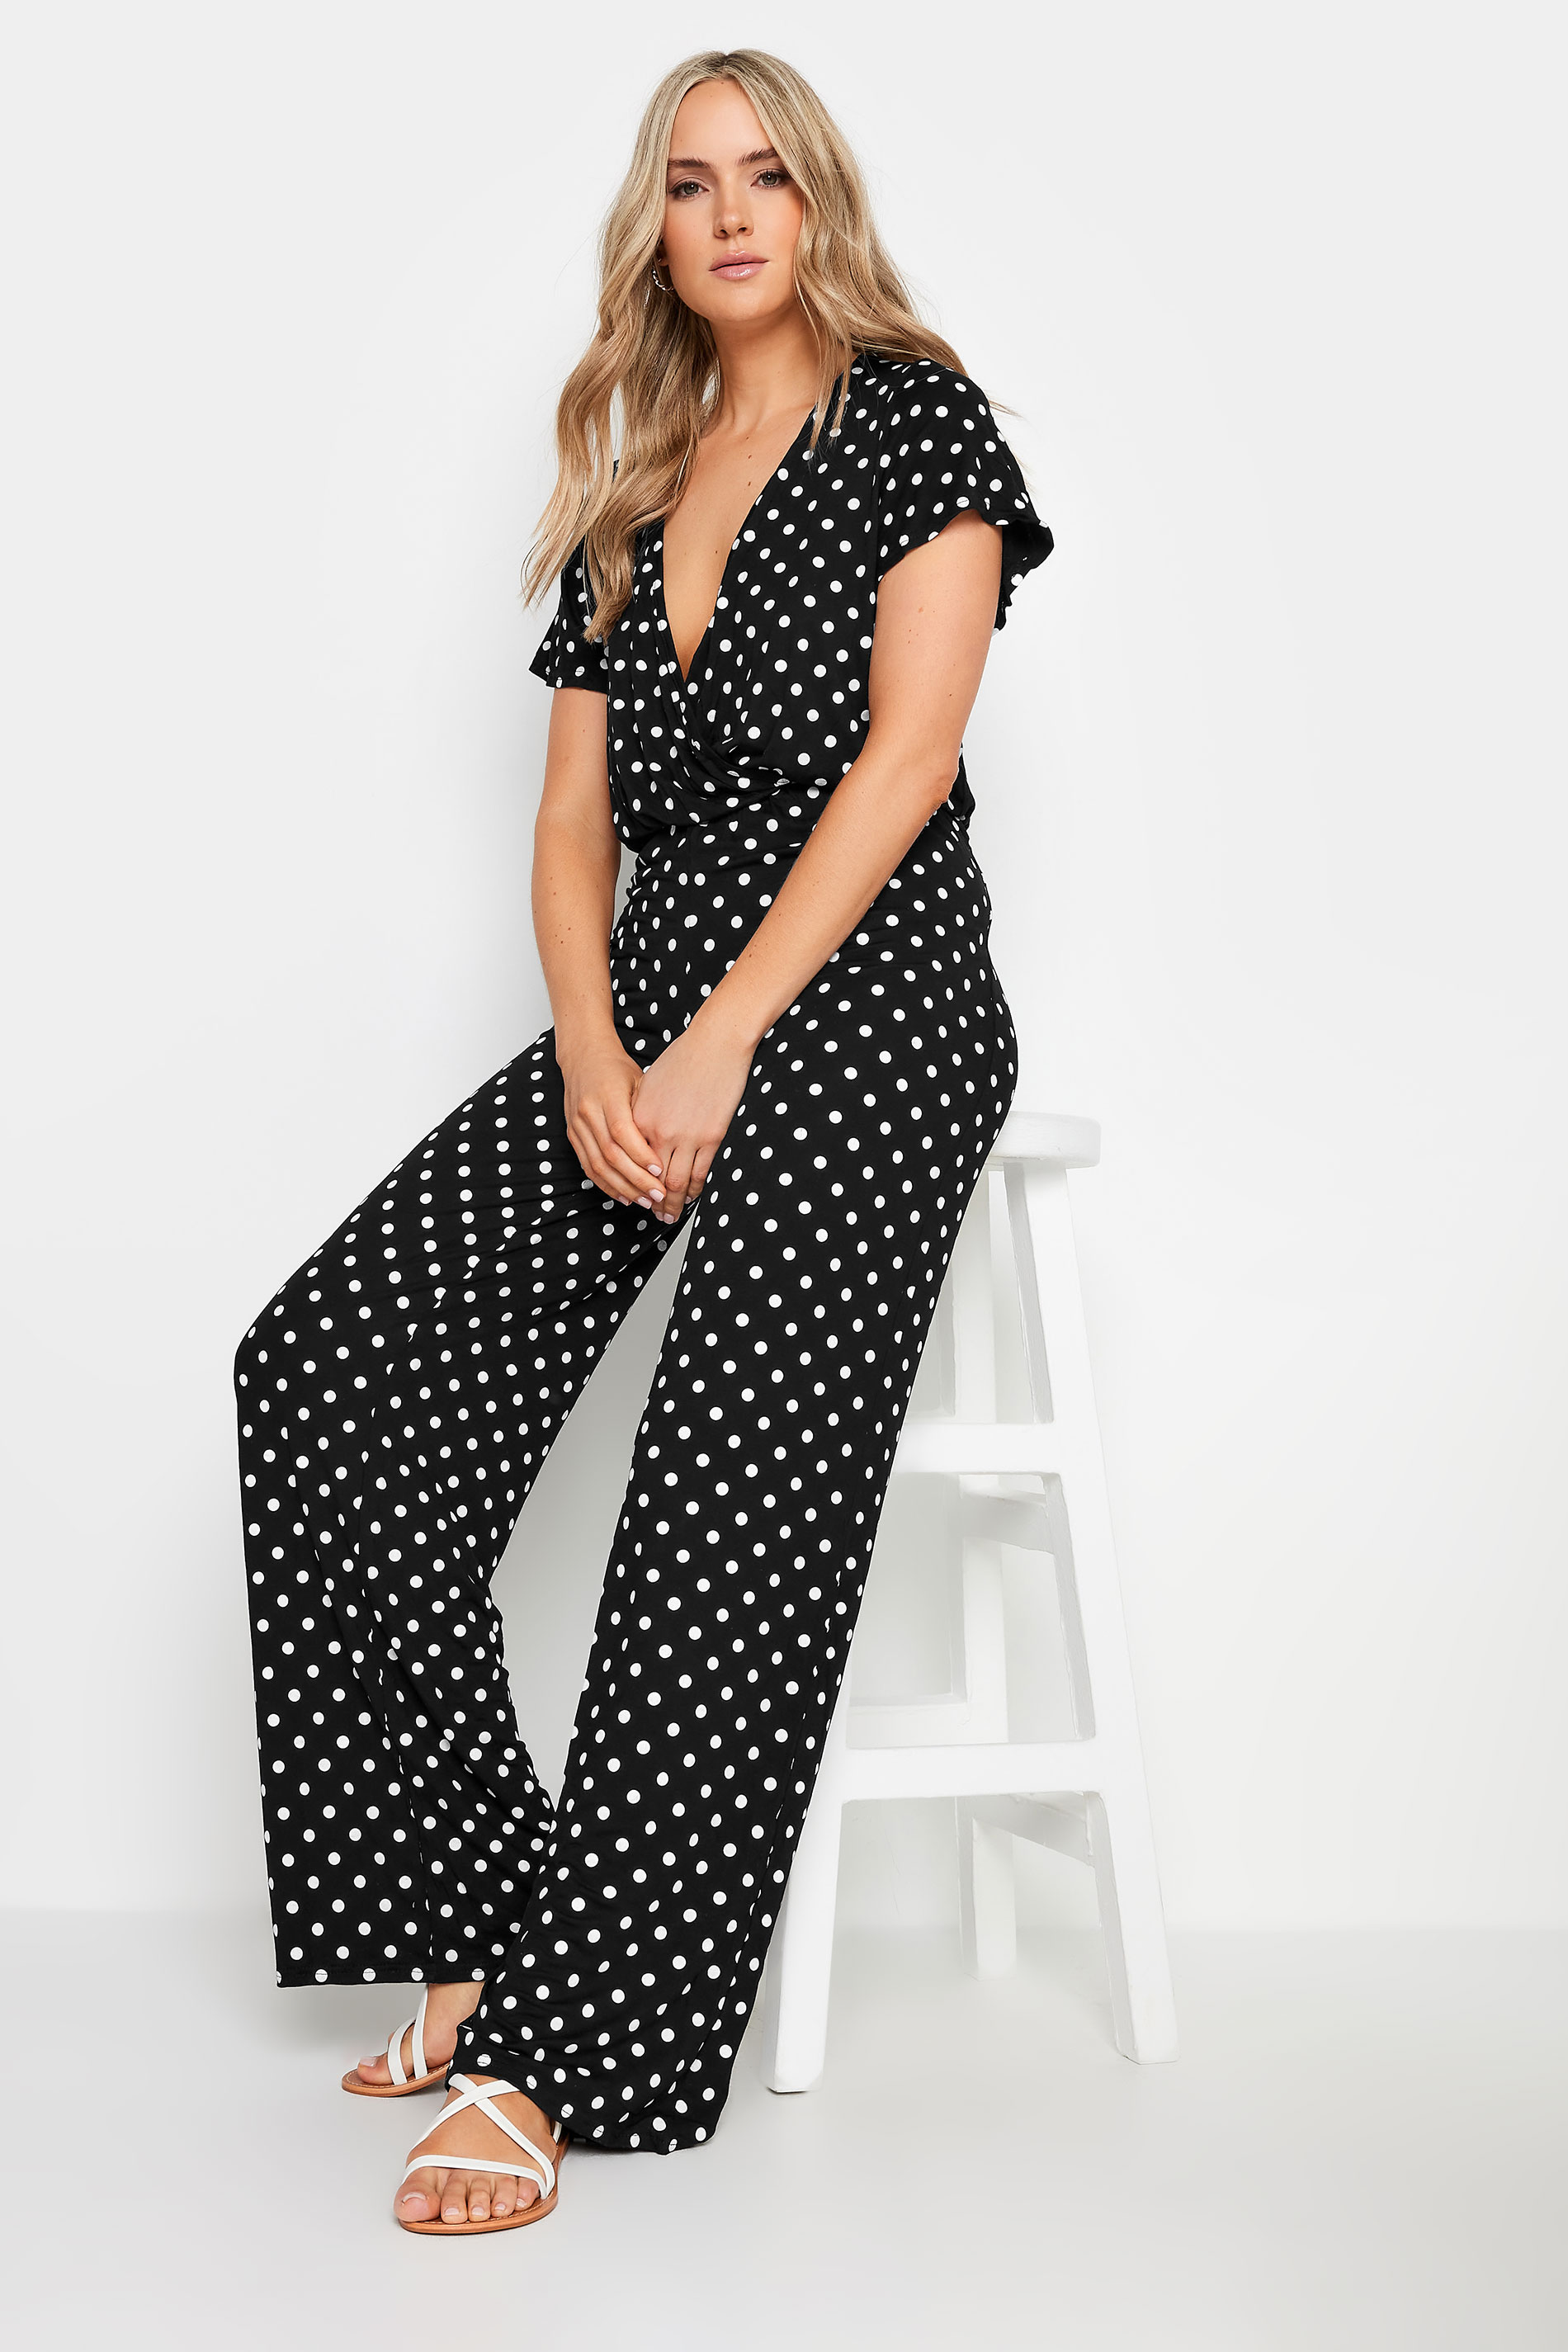 LTS Tall Black Polka Dot Wrap Jumpsuit | Long Tall Sally 2